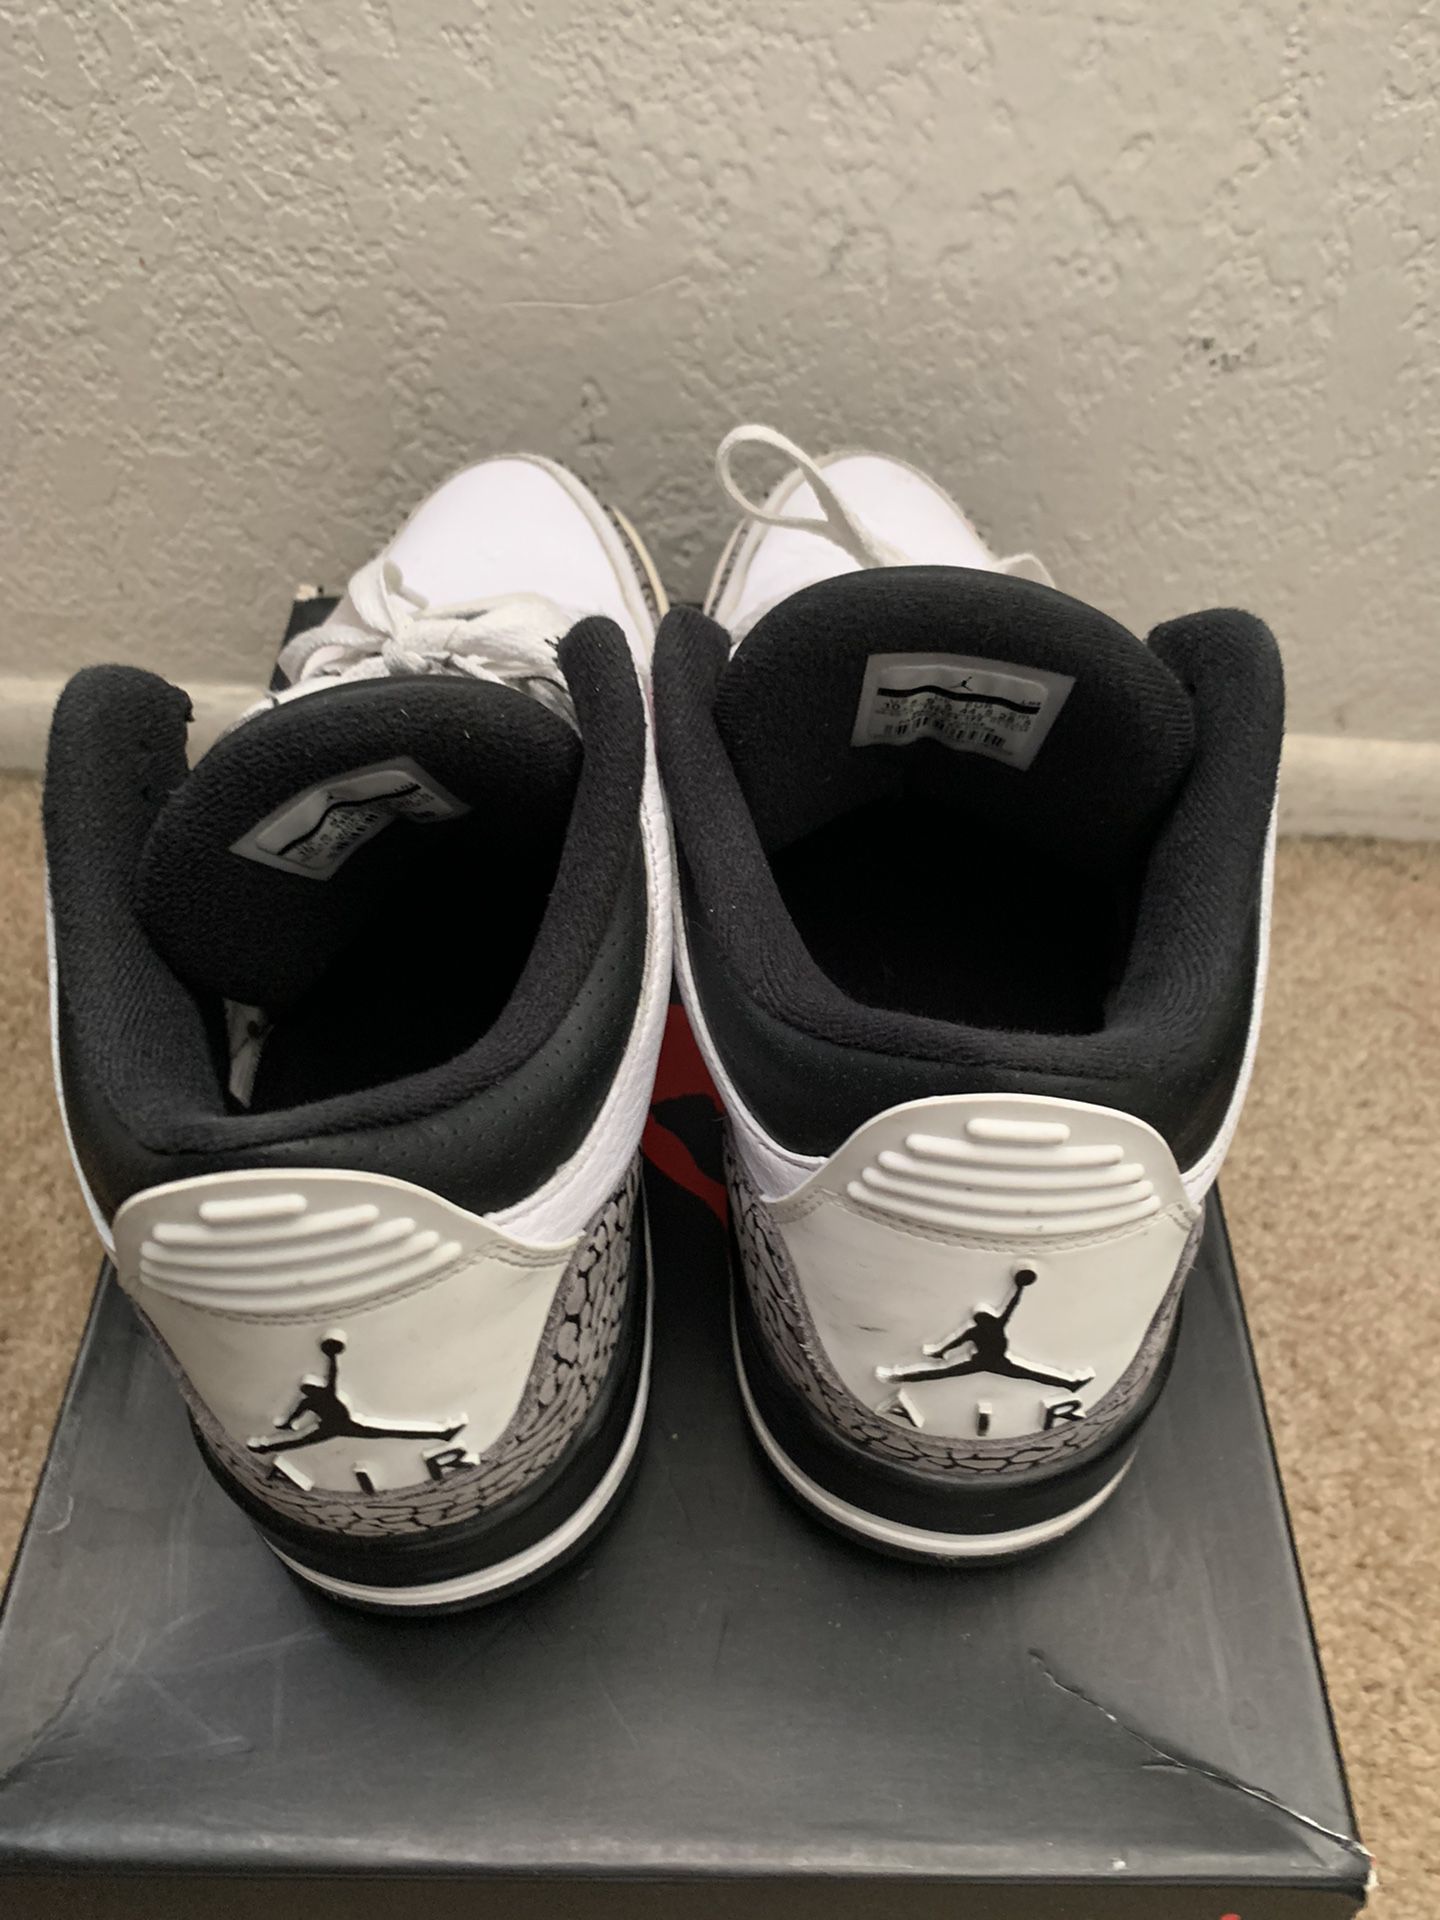 Air Jordan 3 Patchwork Camo Size 11 for Sale in Glendale, AZ - OfferUp